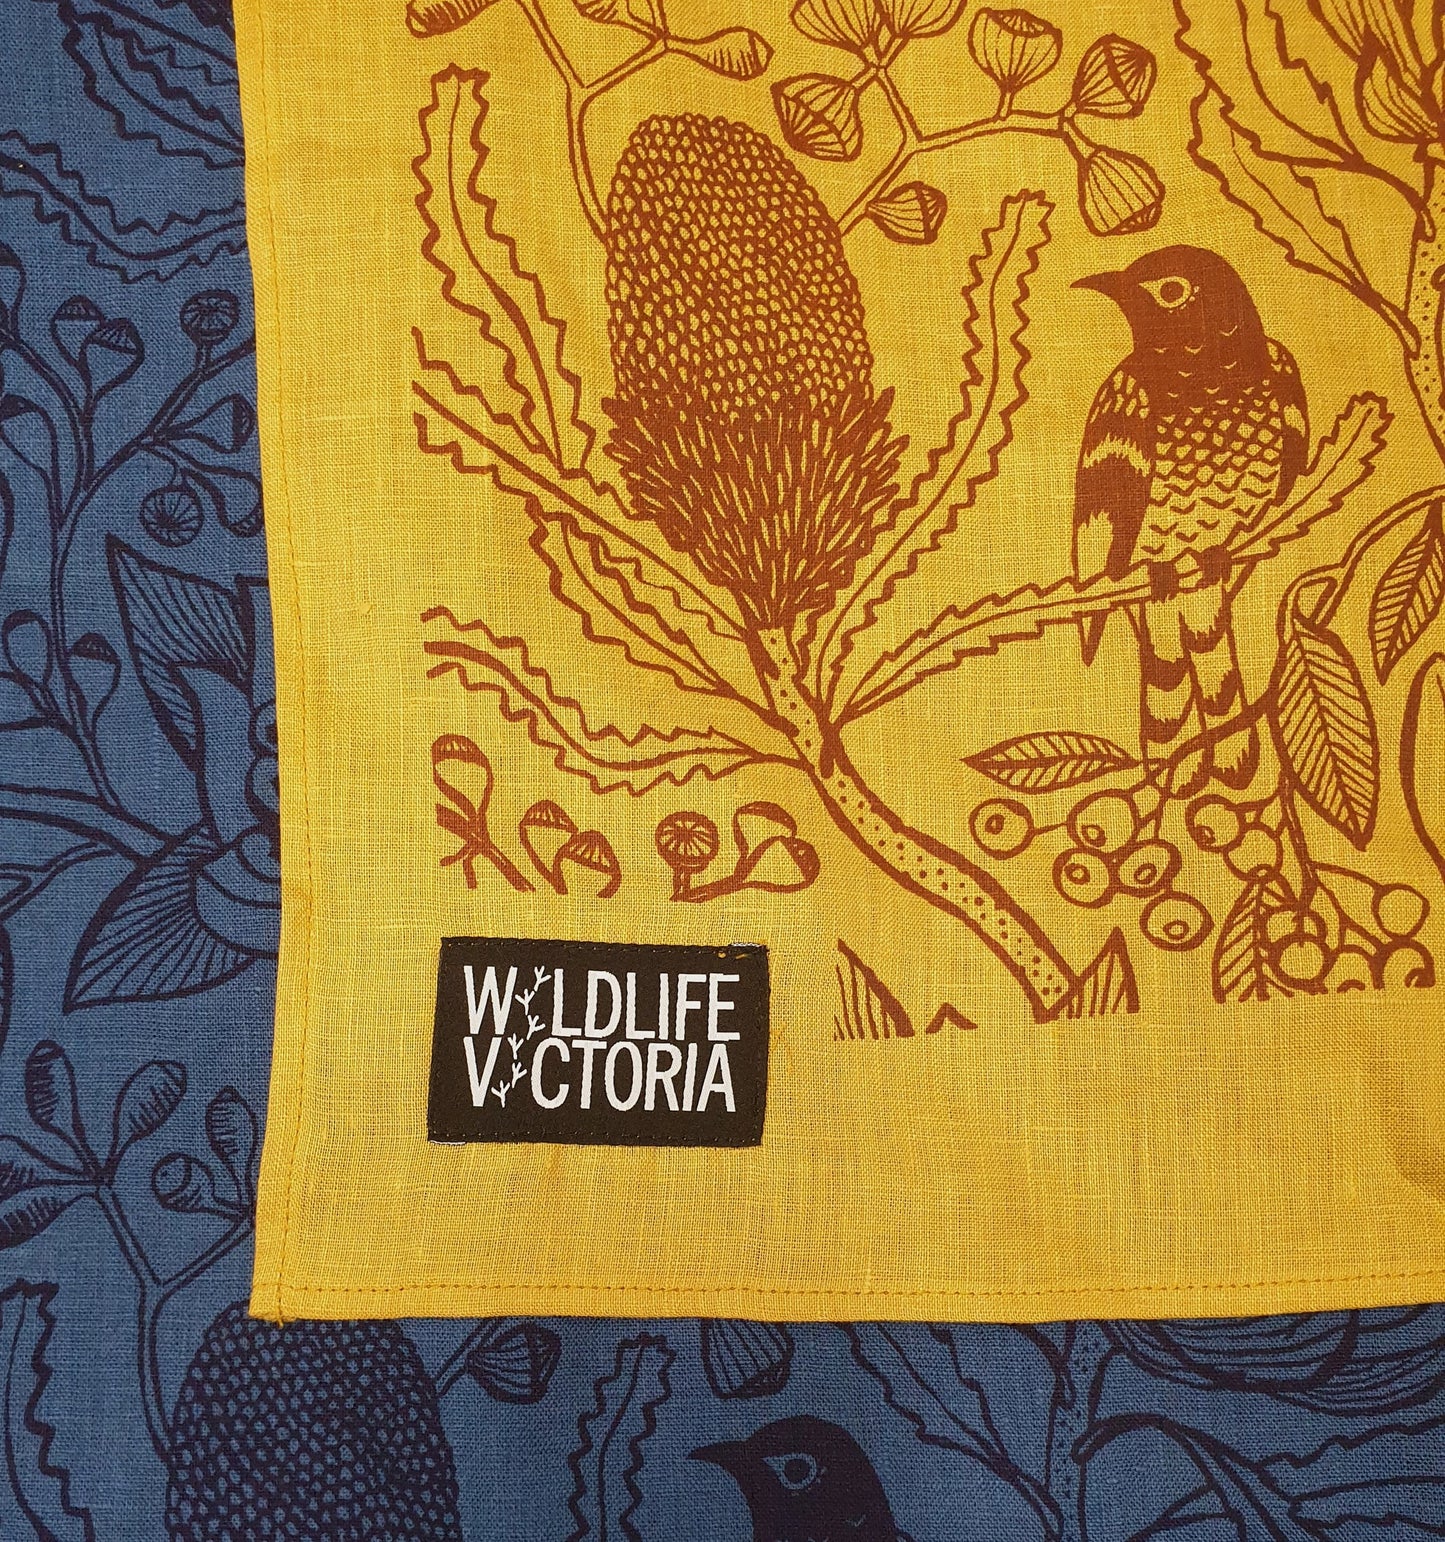 Sample Room X Wildlife Victoria X Ink & Spindle Tea Towel - Mustard yellow